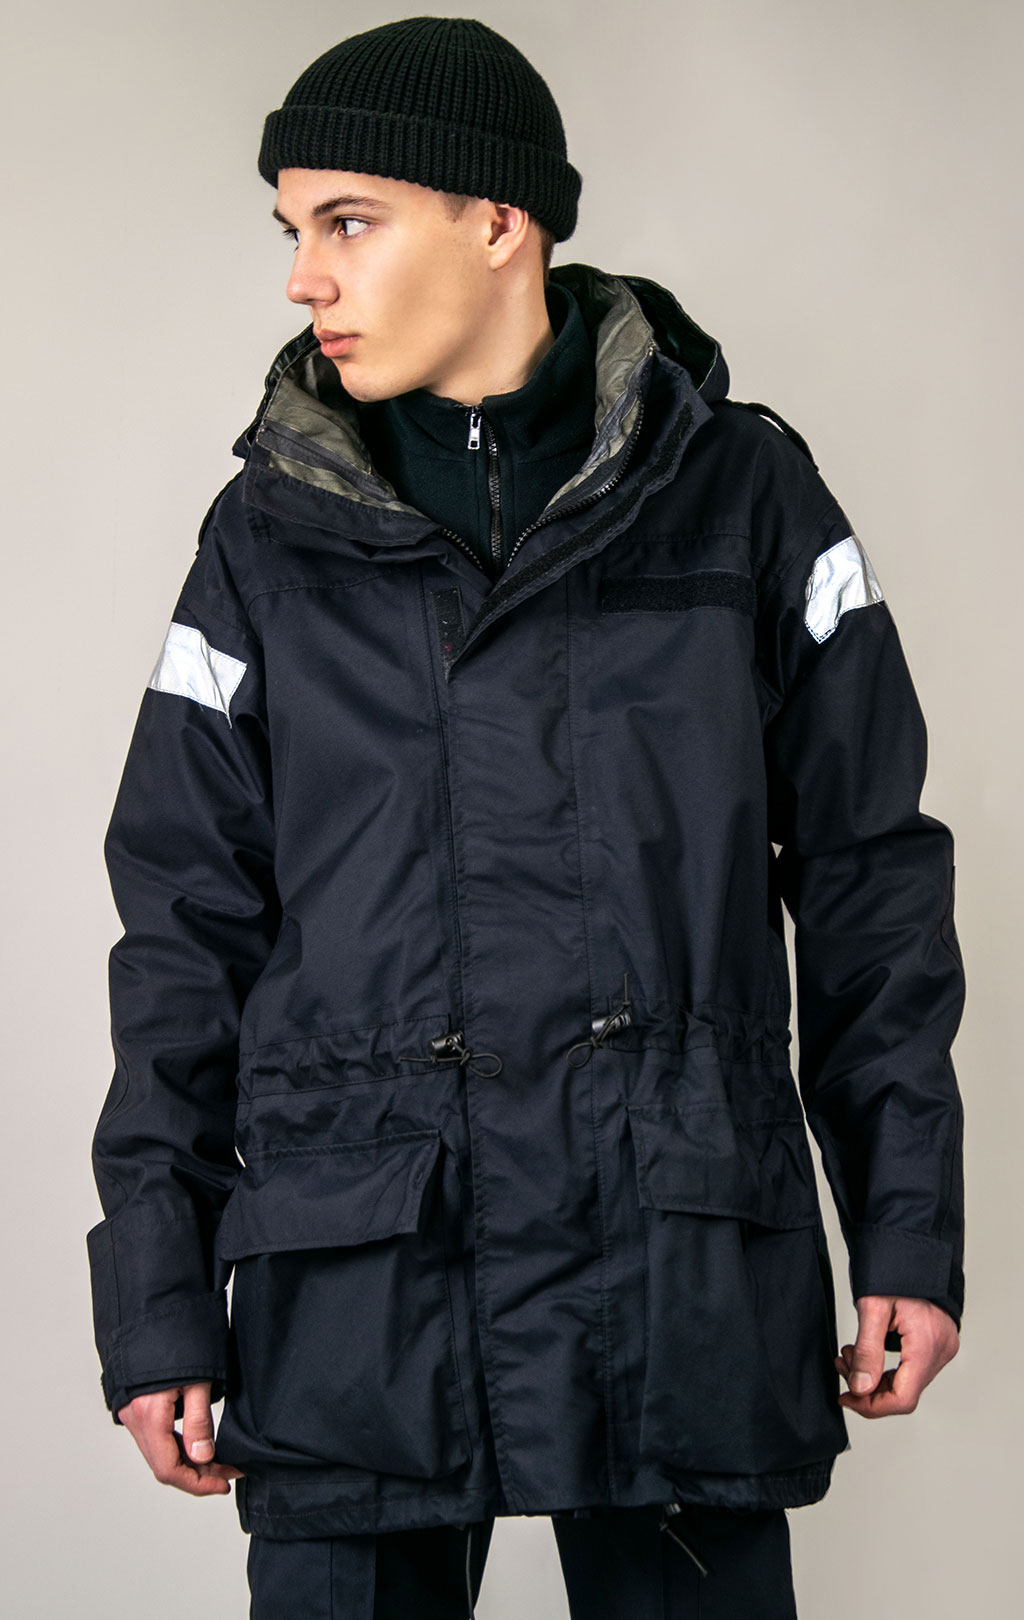 Куртка непромокаемая Gore-Tex RAF Gore-Tex navy б/у Англия